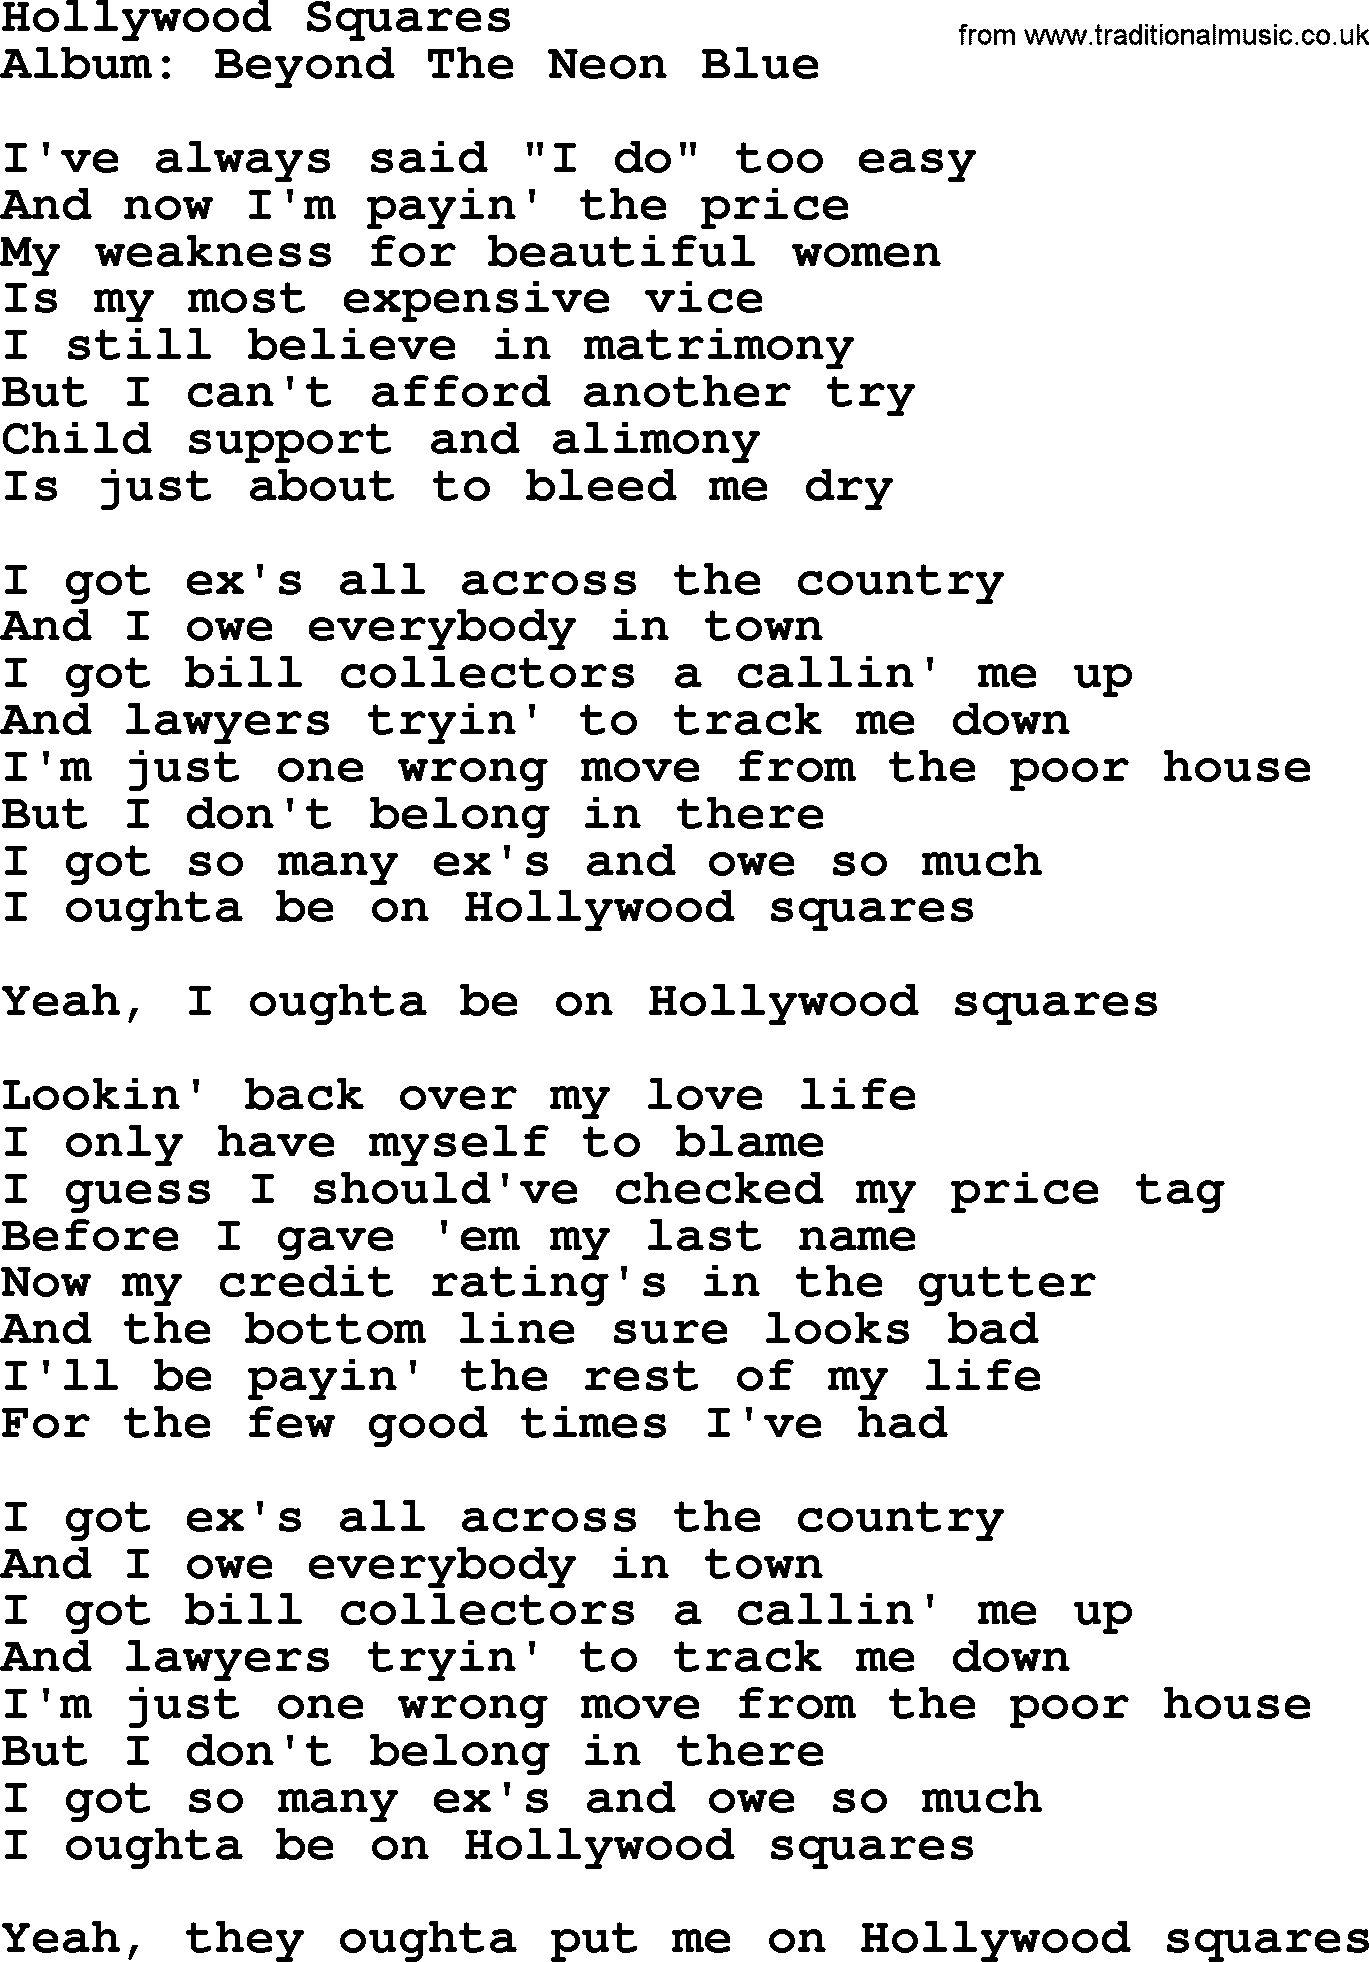 George Strait song: Hollywood Squares, lyrics